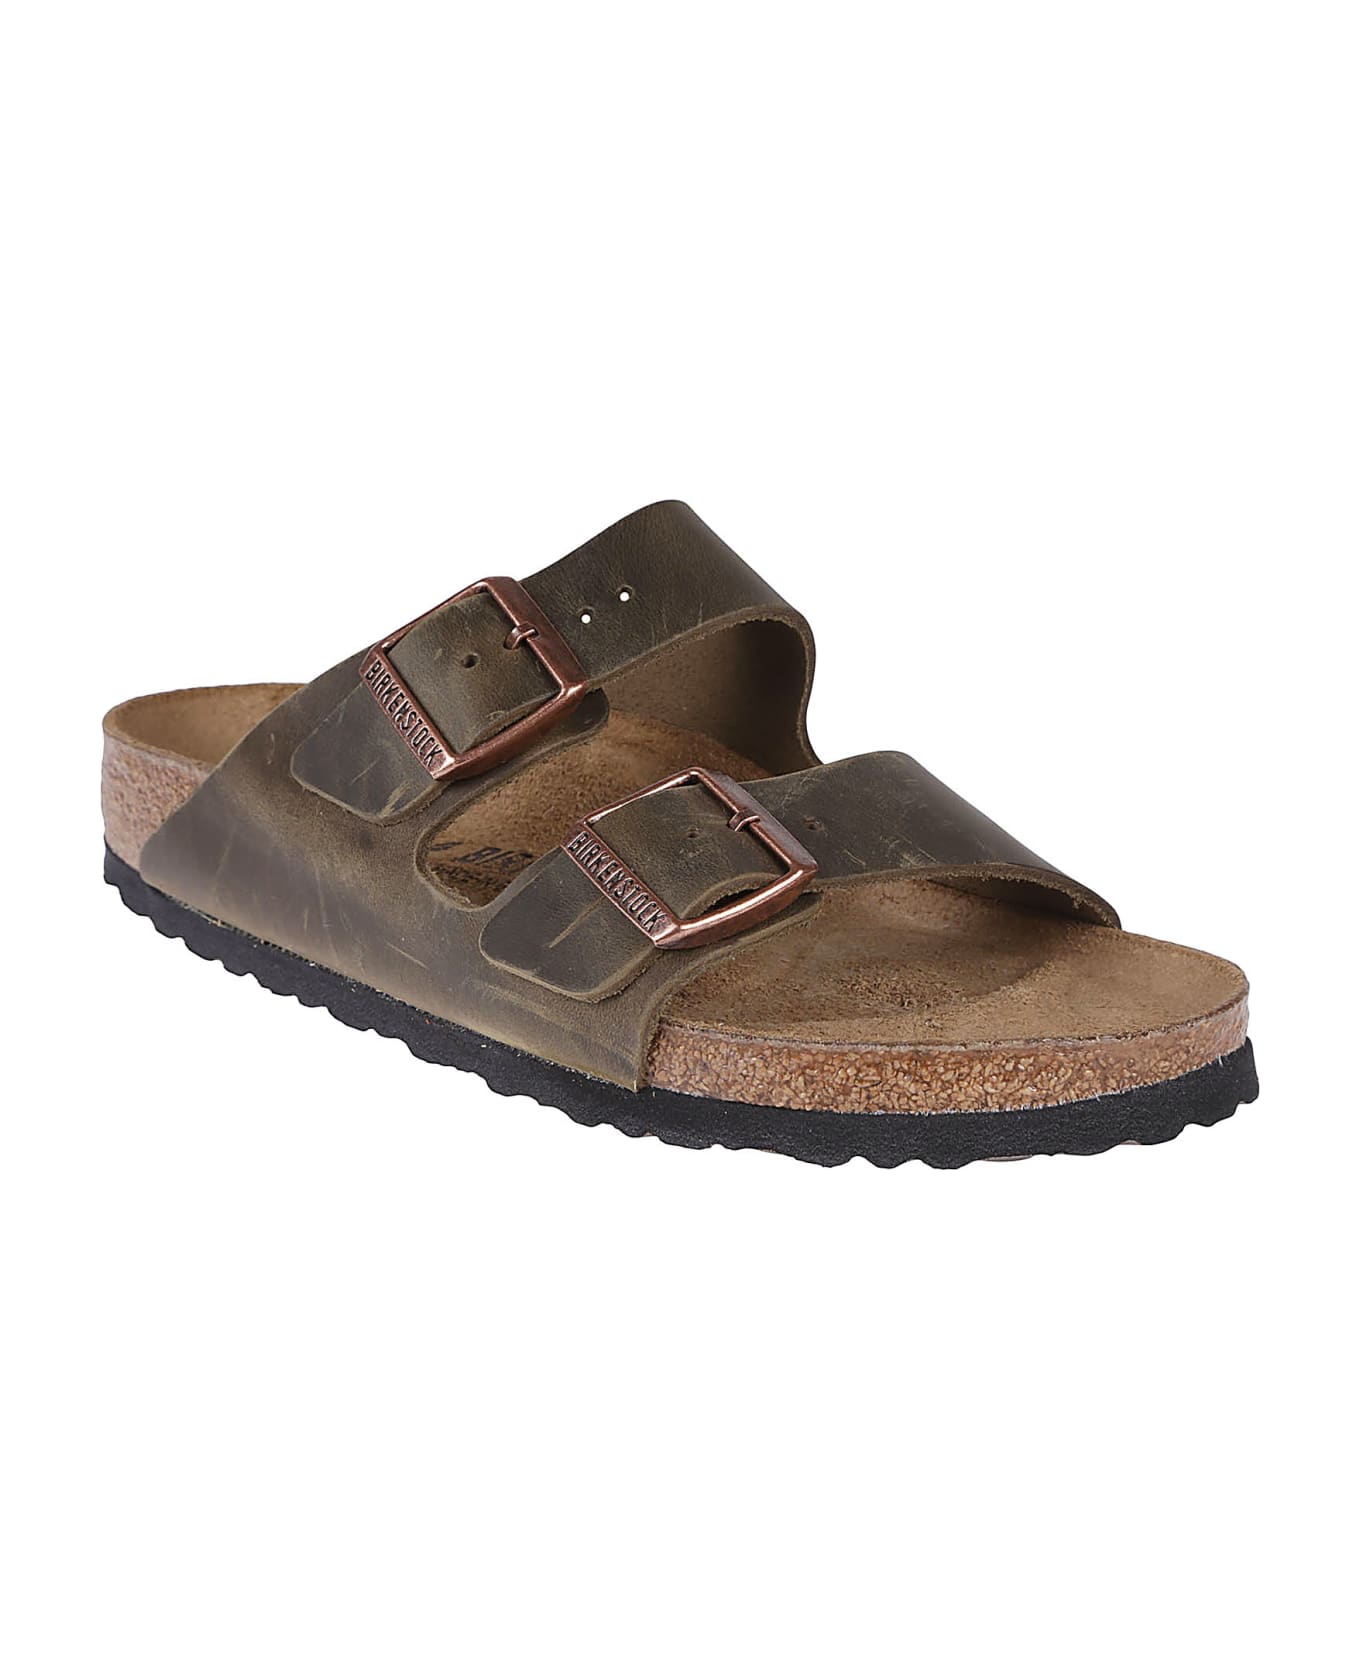 Birkenstock Arizona Sandals - Faded Khaki